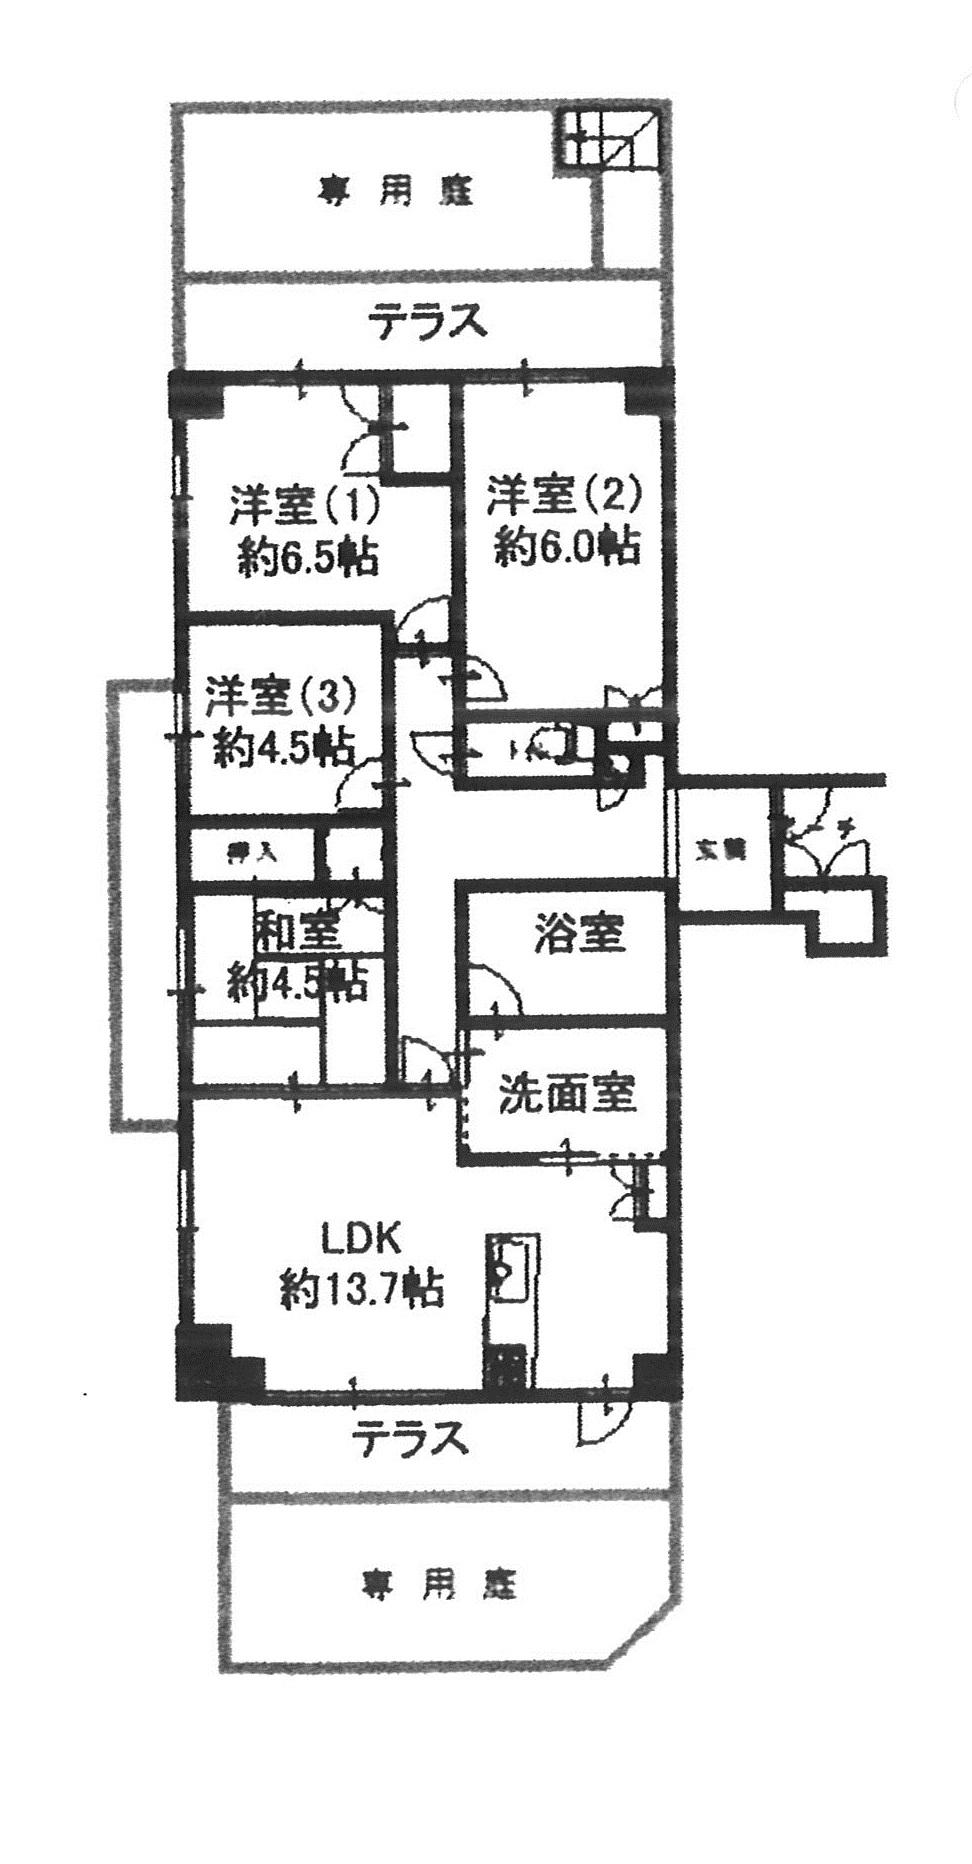 Floor plan. 4LDK, Price 33,900,000 yen, Footprint 81.8 sq m